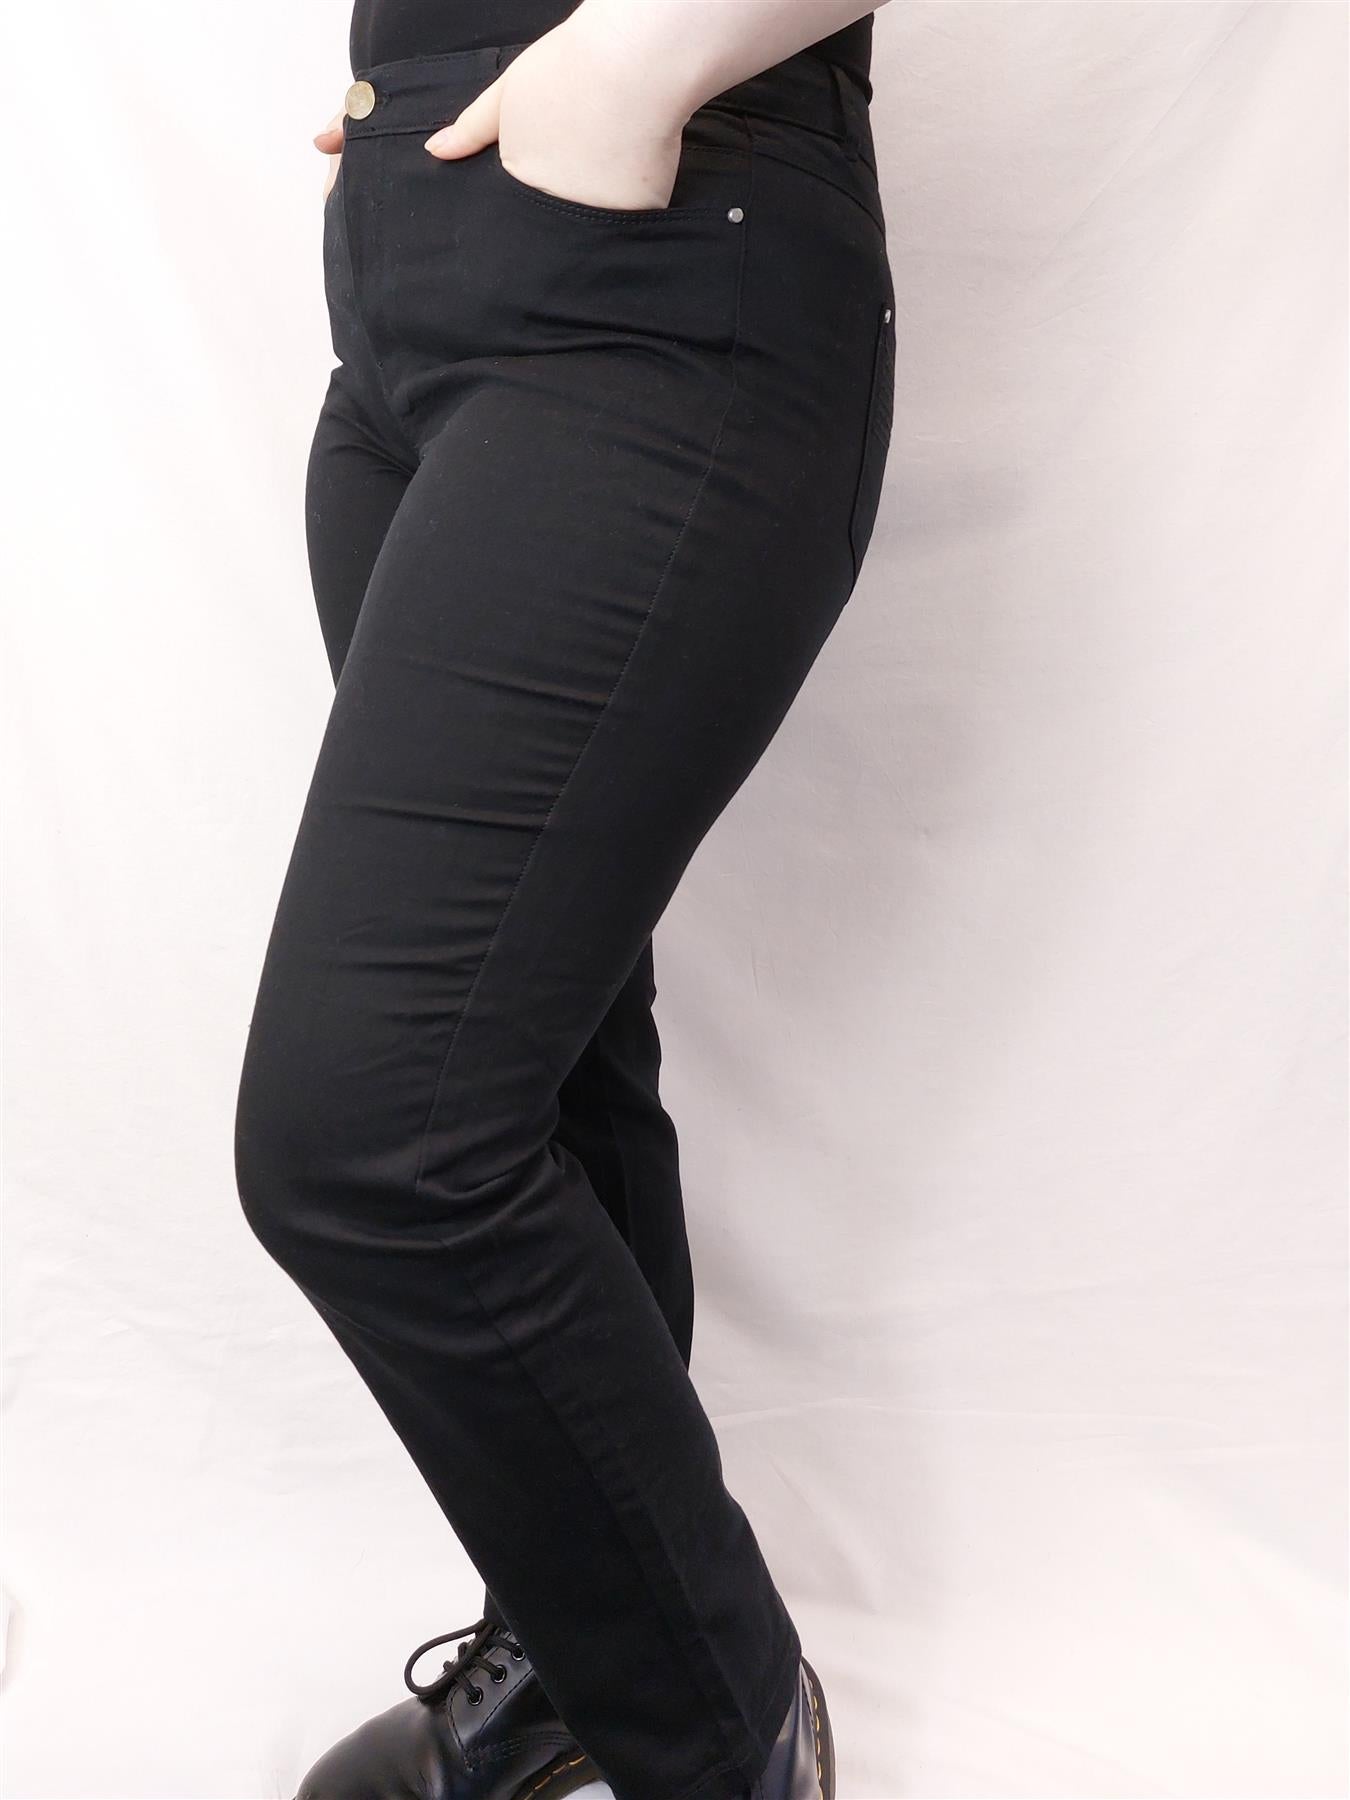 C&A Straight Leg Jeans  Stretch Denim Smart Casual Trousers Women's